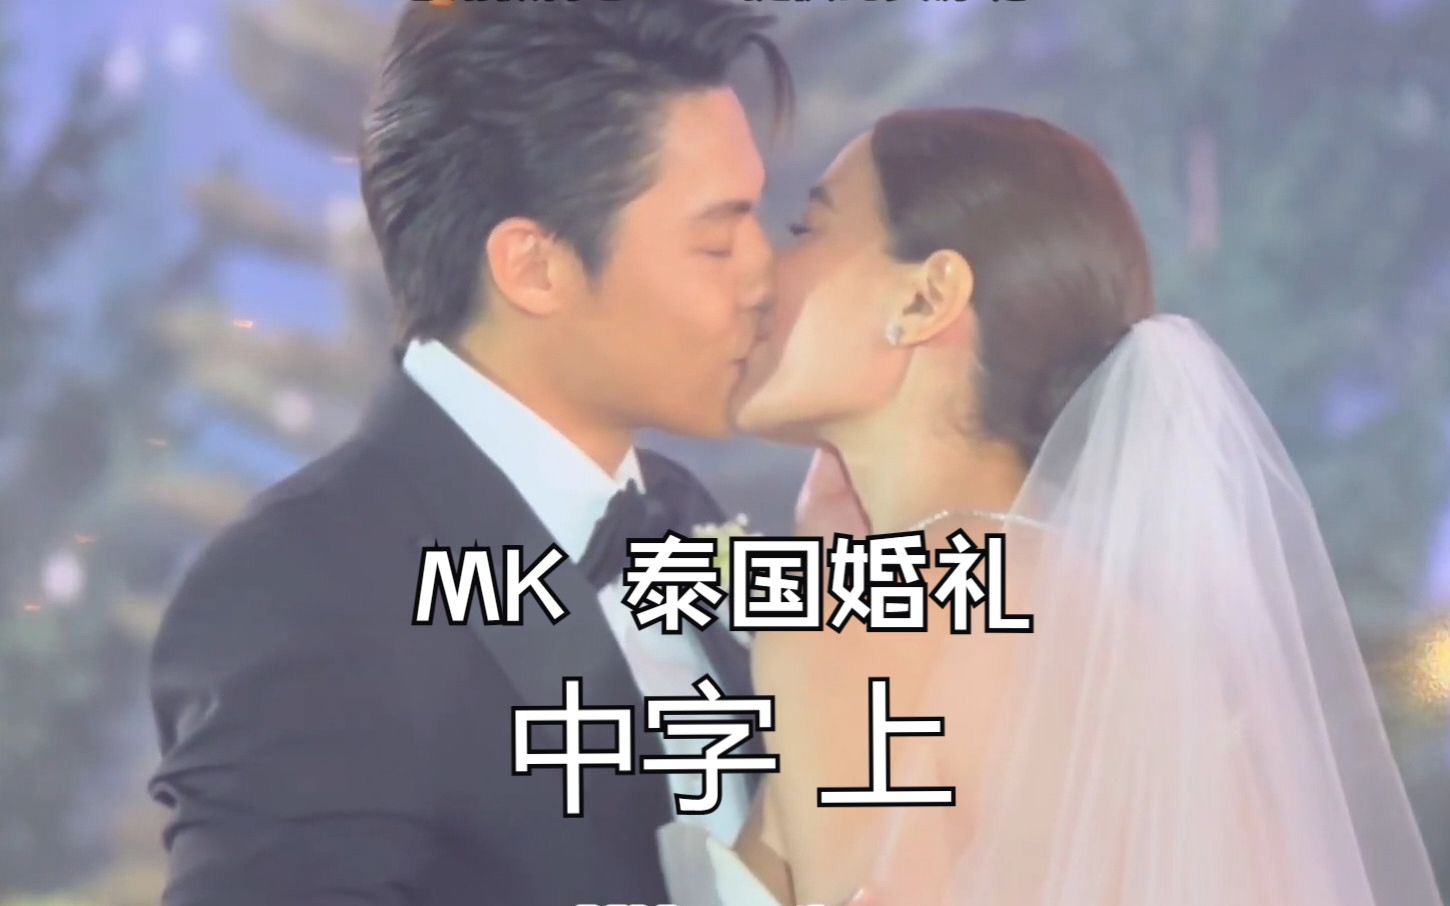 mark & kim 泰国婚礼 【中字】上 放了求婚和科莫湖婚礼视频哒